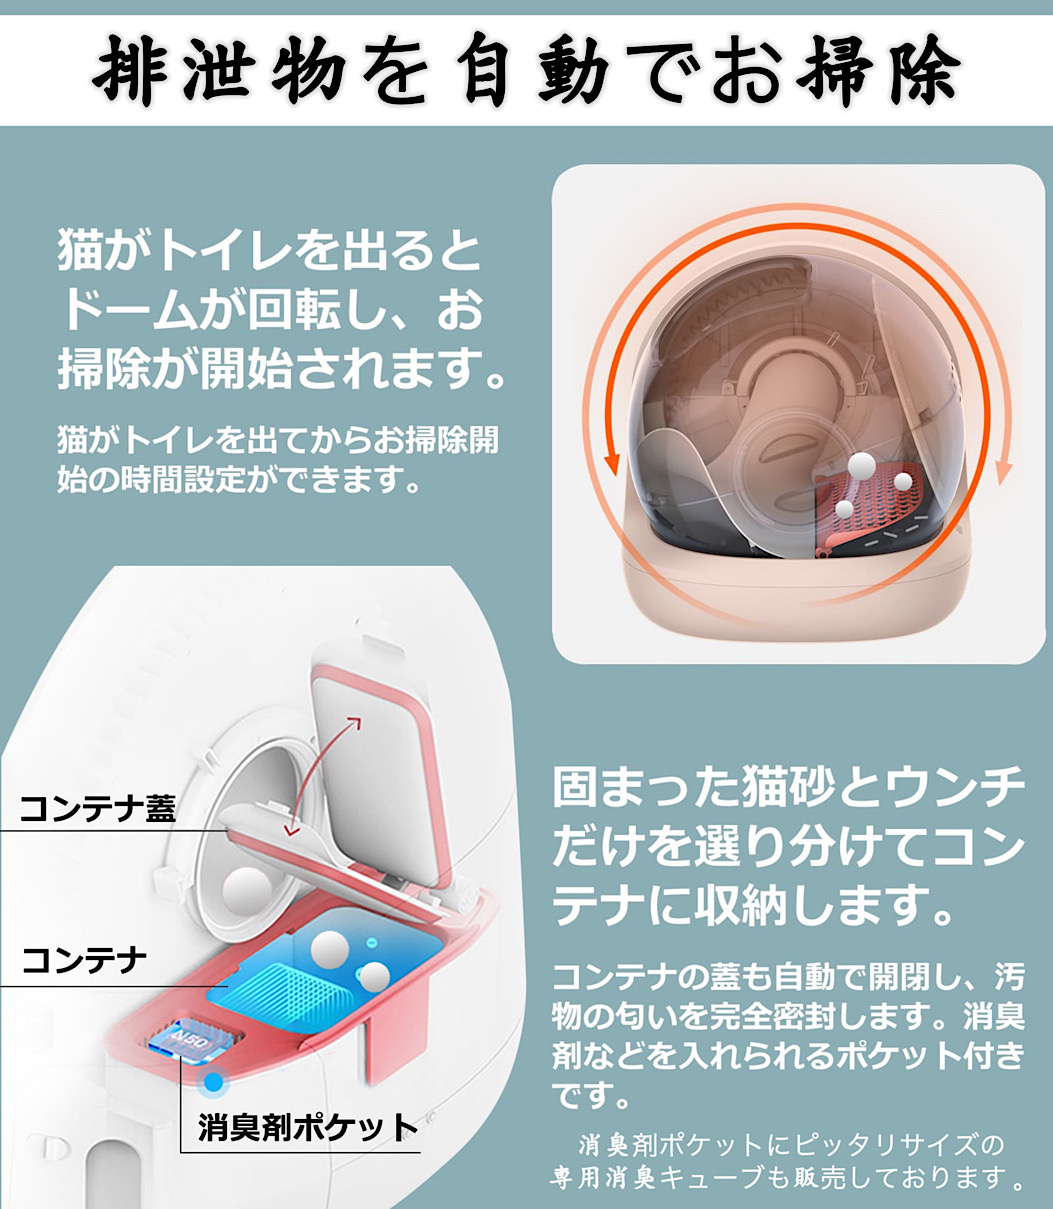 PETKIT-PURA-MAX (高級版) 】自動猫用トイレ ペットキット 自動ネコ